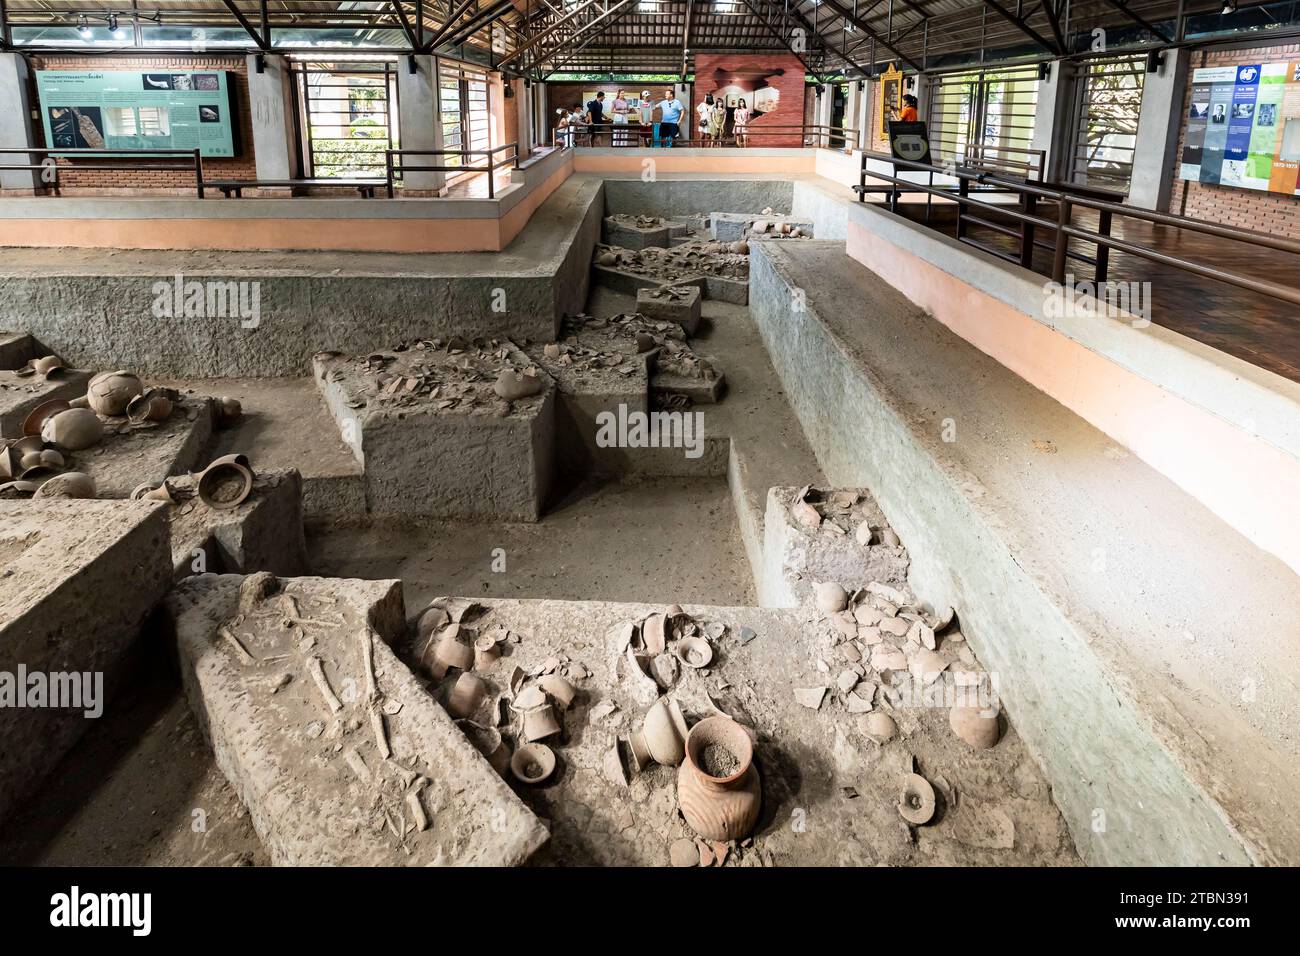 Ban Chiang national museum, Exhibition of excavation site, at Wat Pho Si Nai, Ban Chiang, Udon Thani, Isan, Thailand, Southeast Asia, Asia Stock Photo